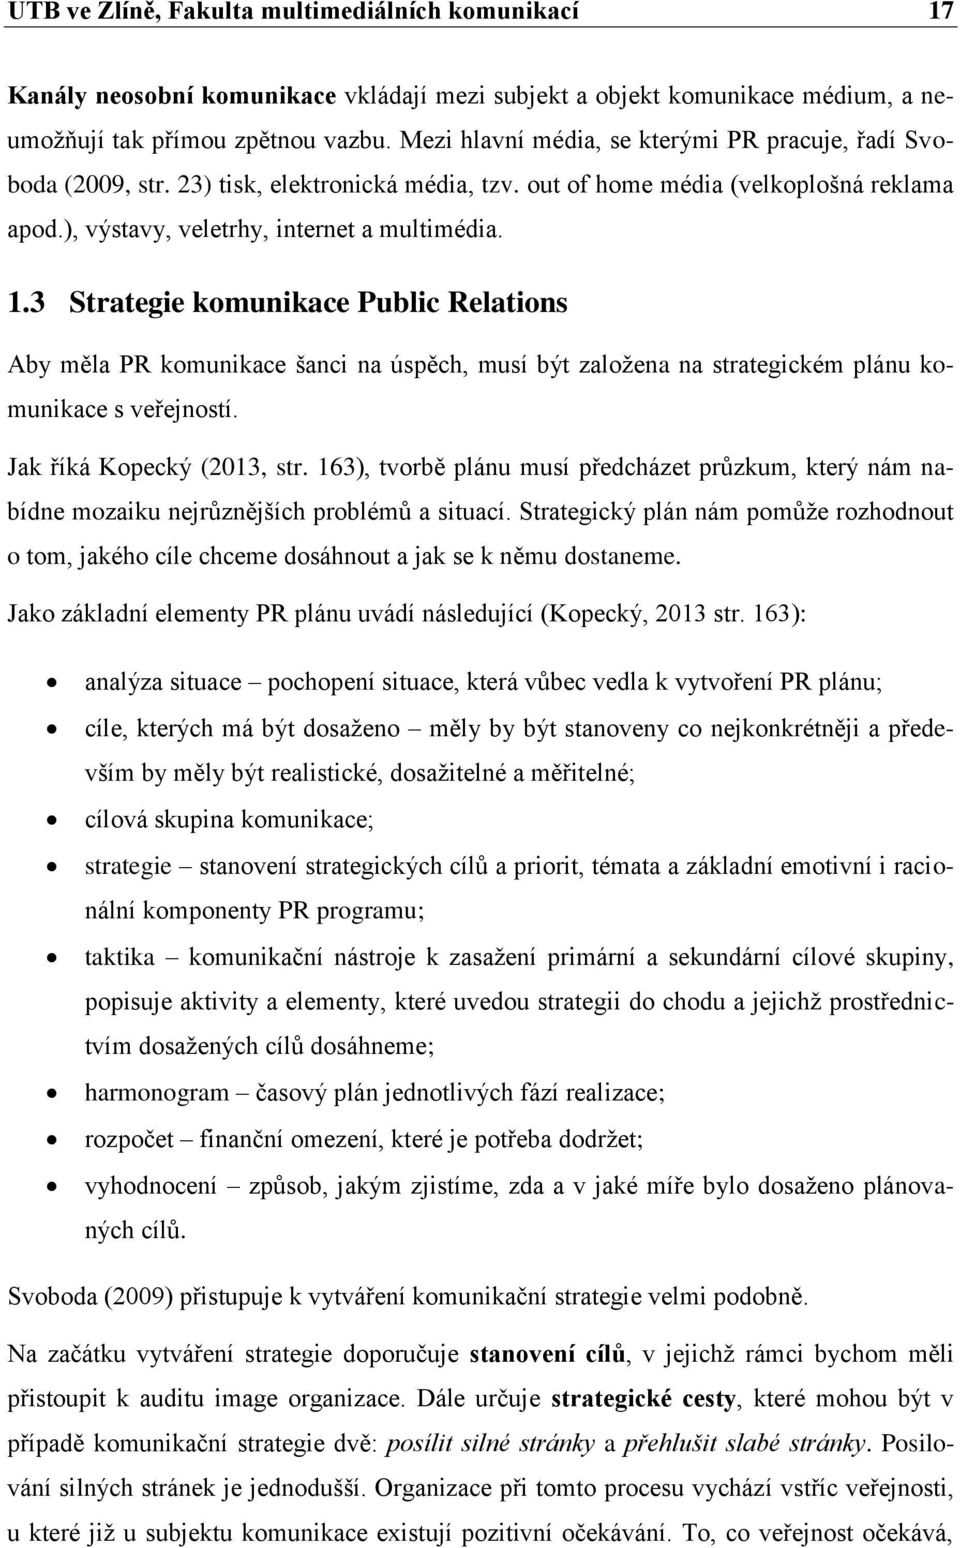 Public Relations v neziskové organizaci. Bc. Ivana Chodurová - PDF Free  Download